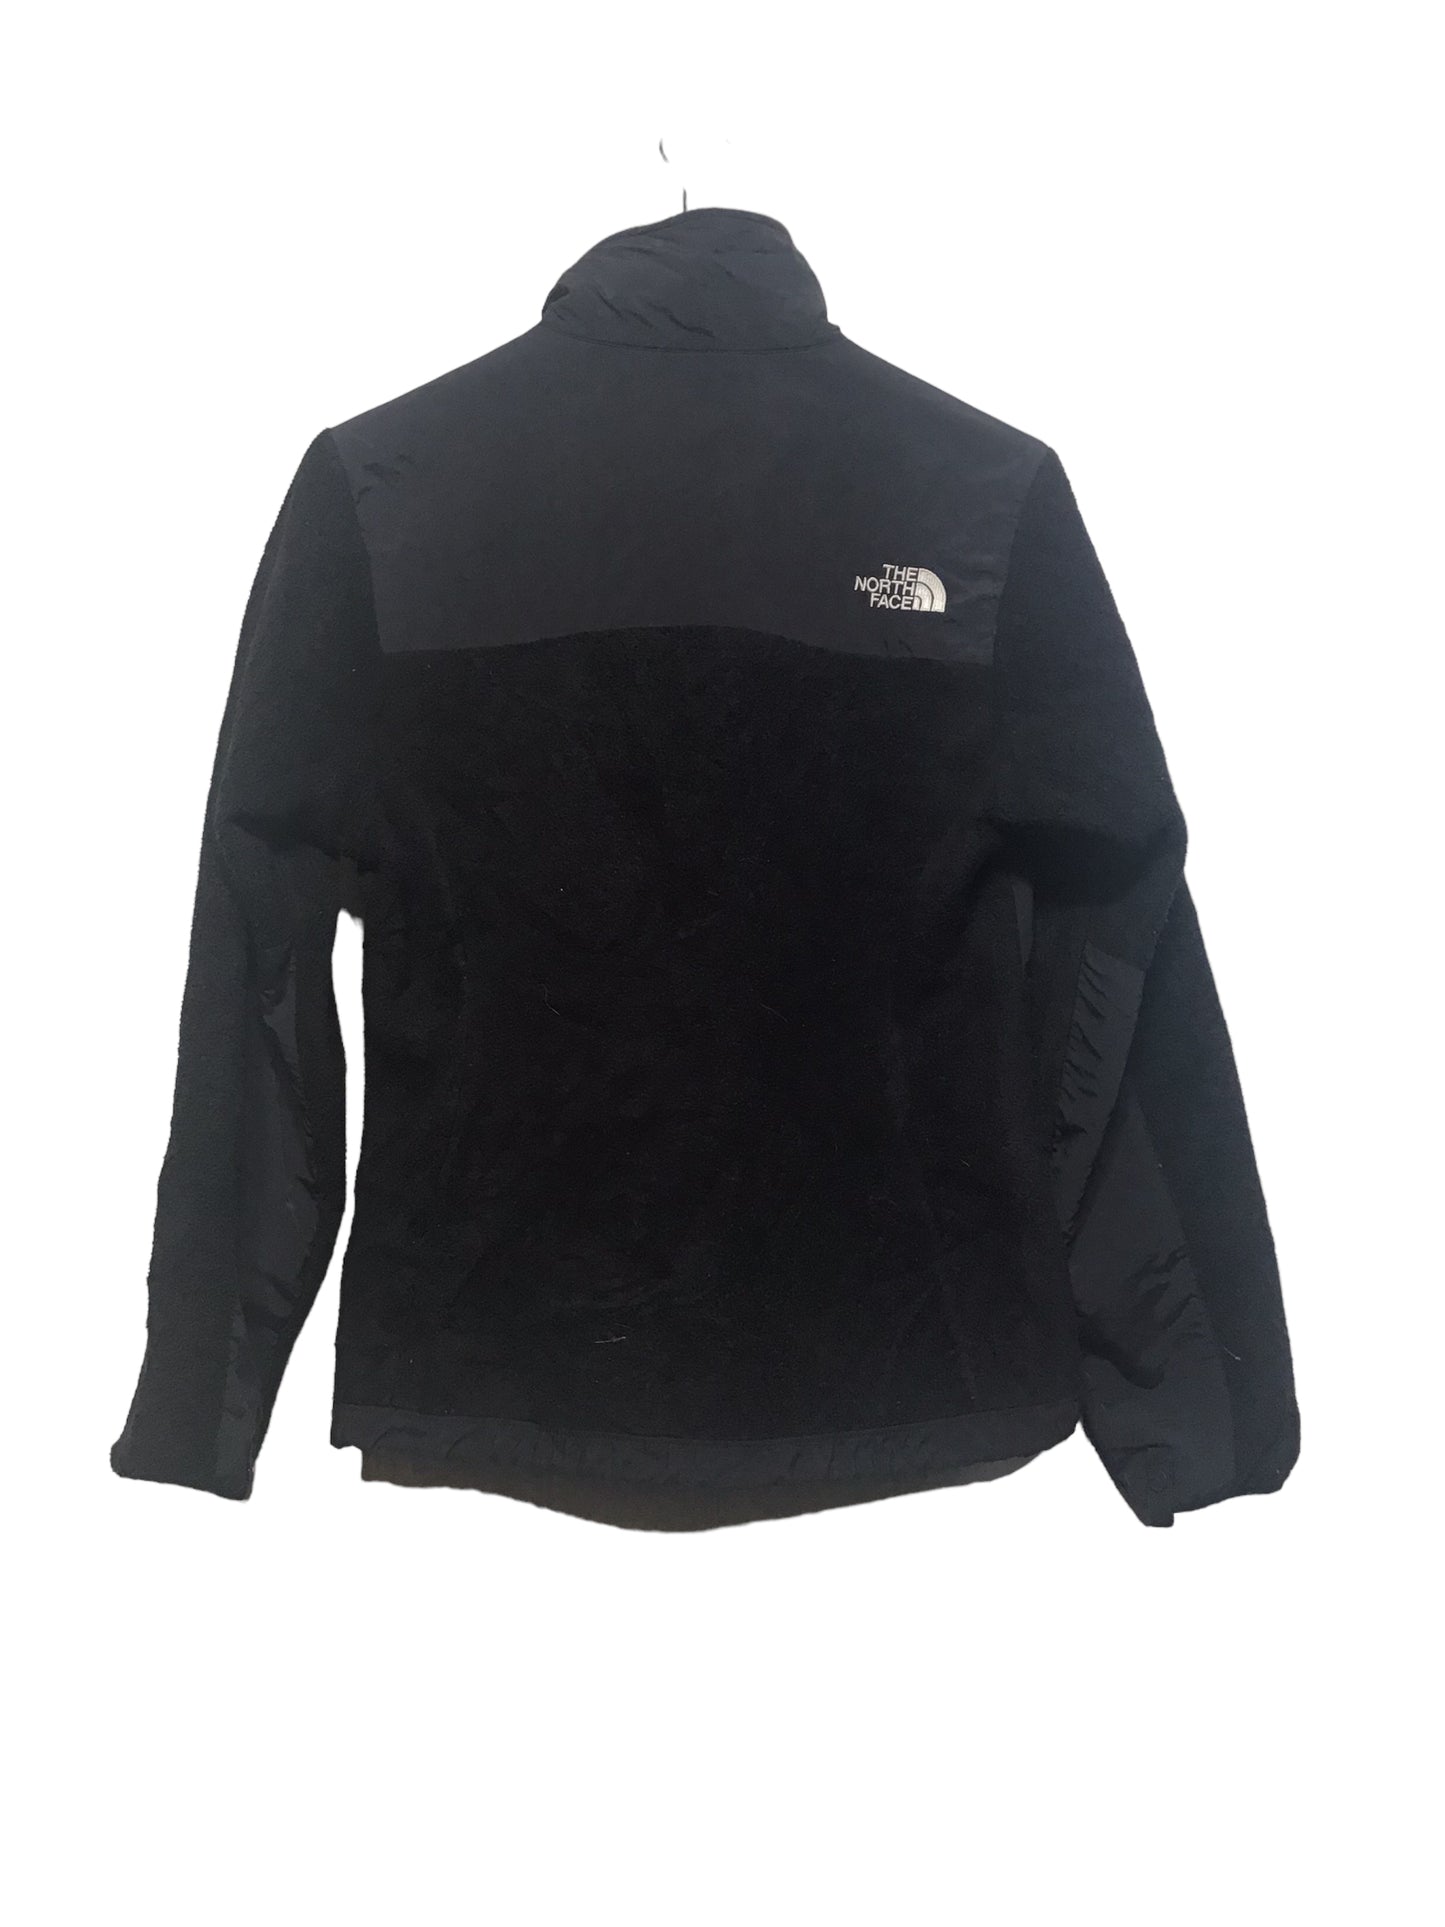 The North Face Black Denali Jacket (Women’s Size S)